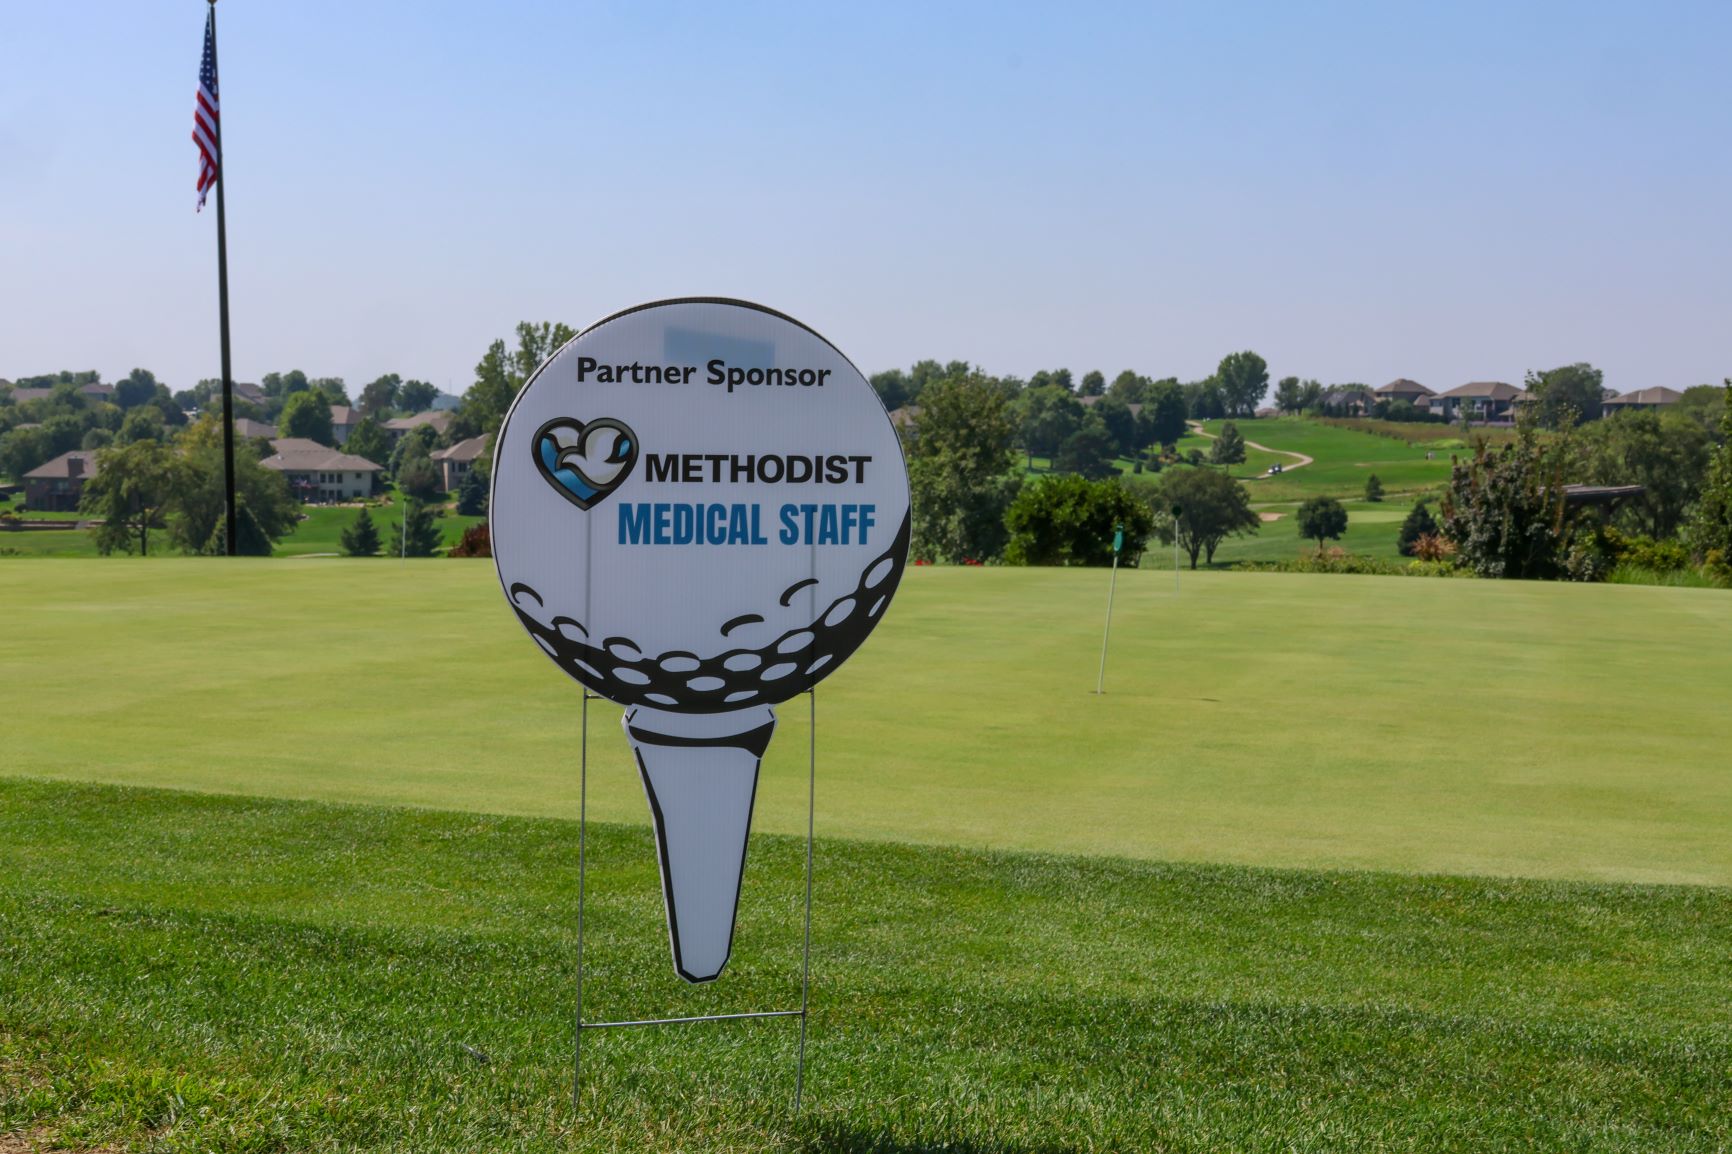 Methodist VIP Golf Classic Photo Gallery